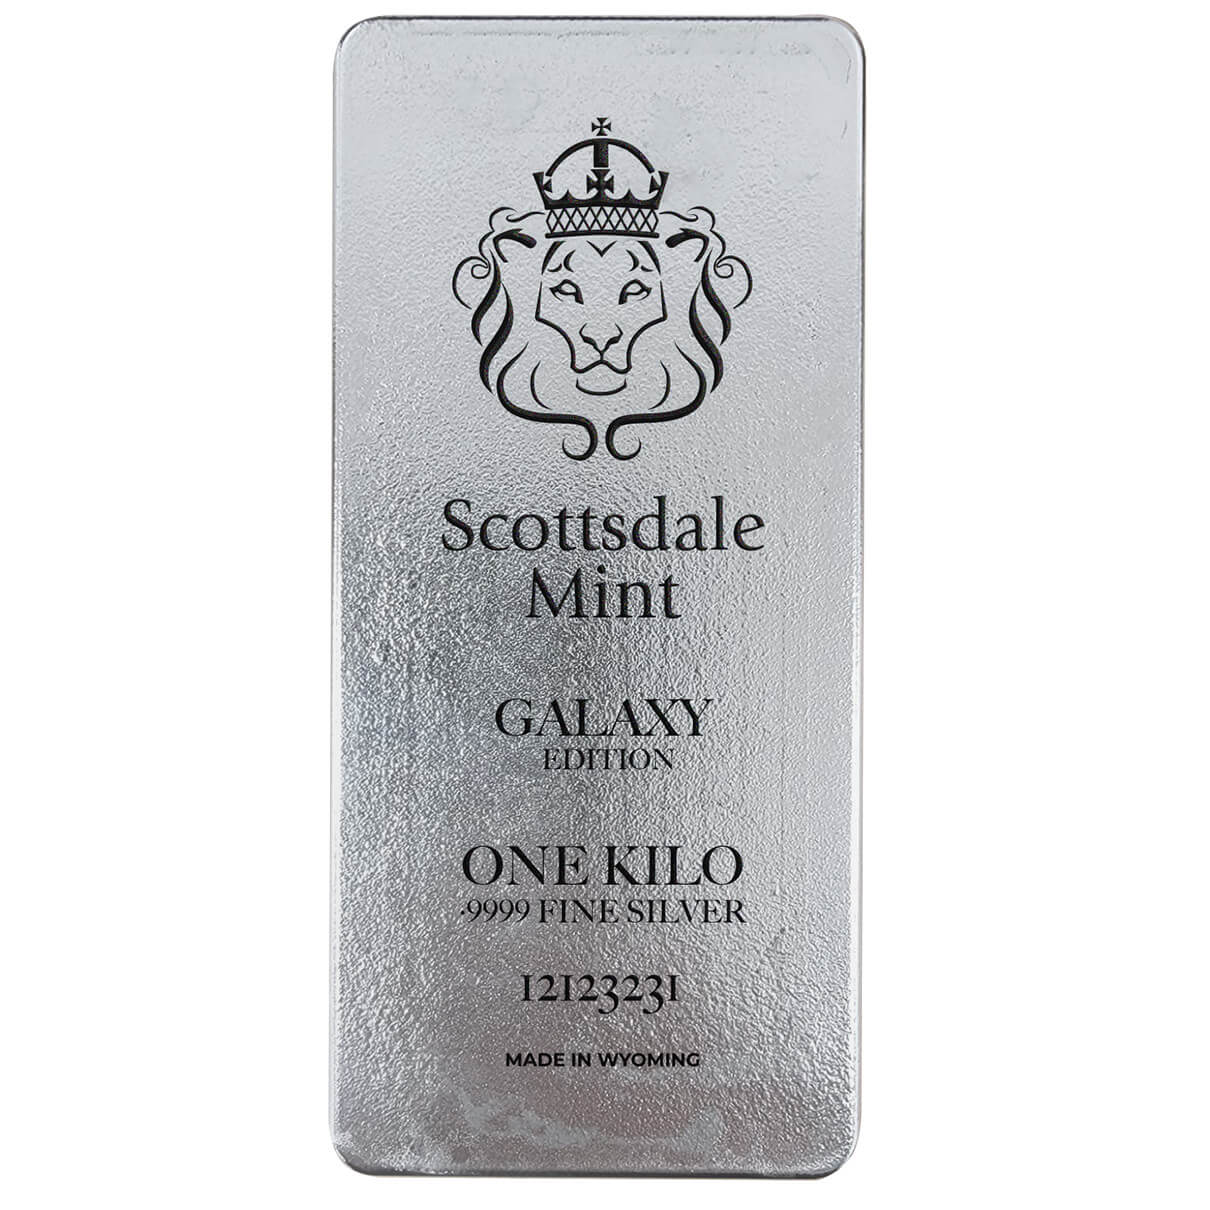 Scottsdale Mint Galaxy Edition Silver Kilo Bar